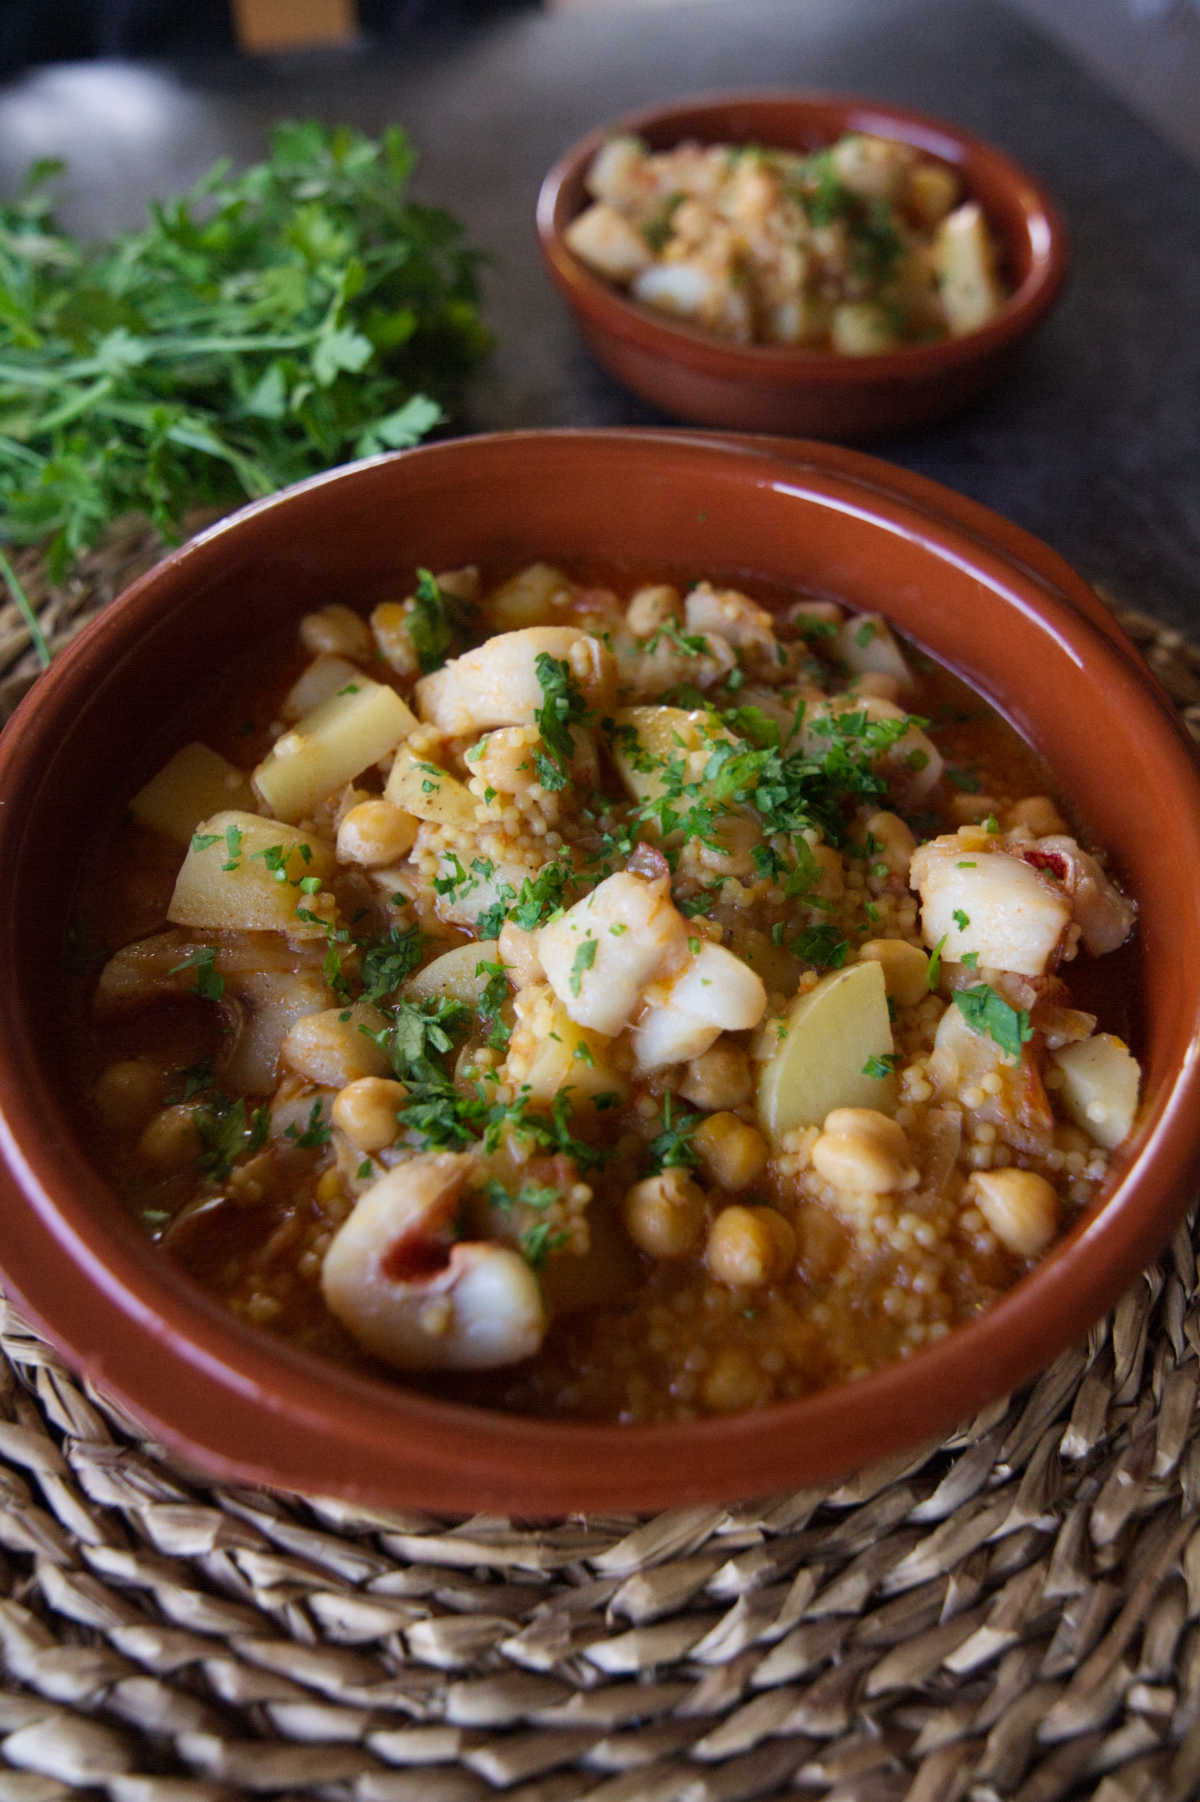 A small cermaic bowl of maravilla fish stew